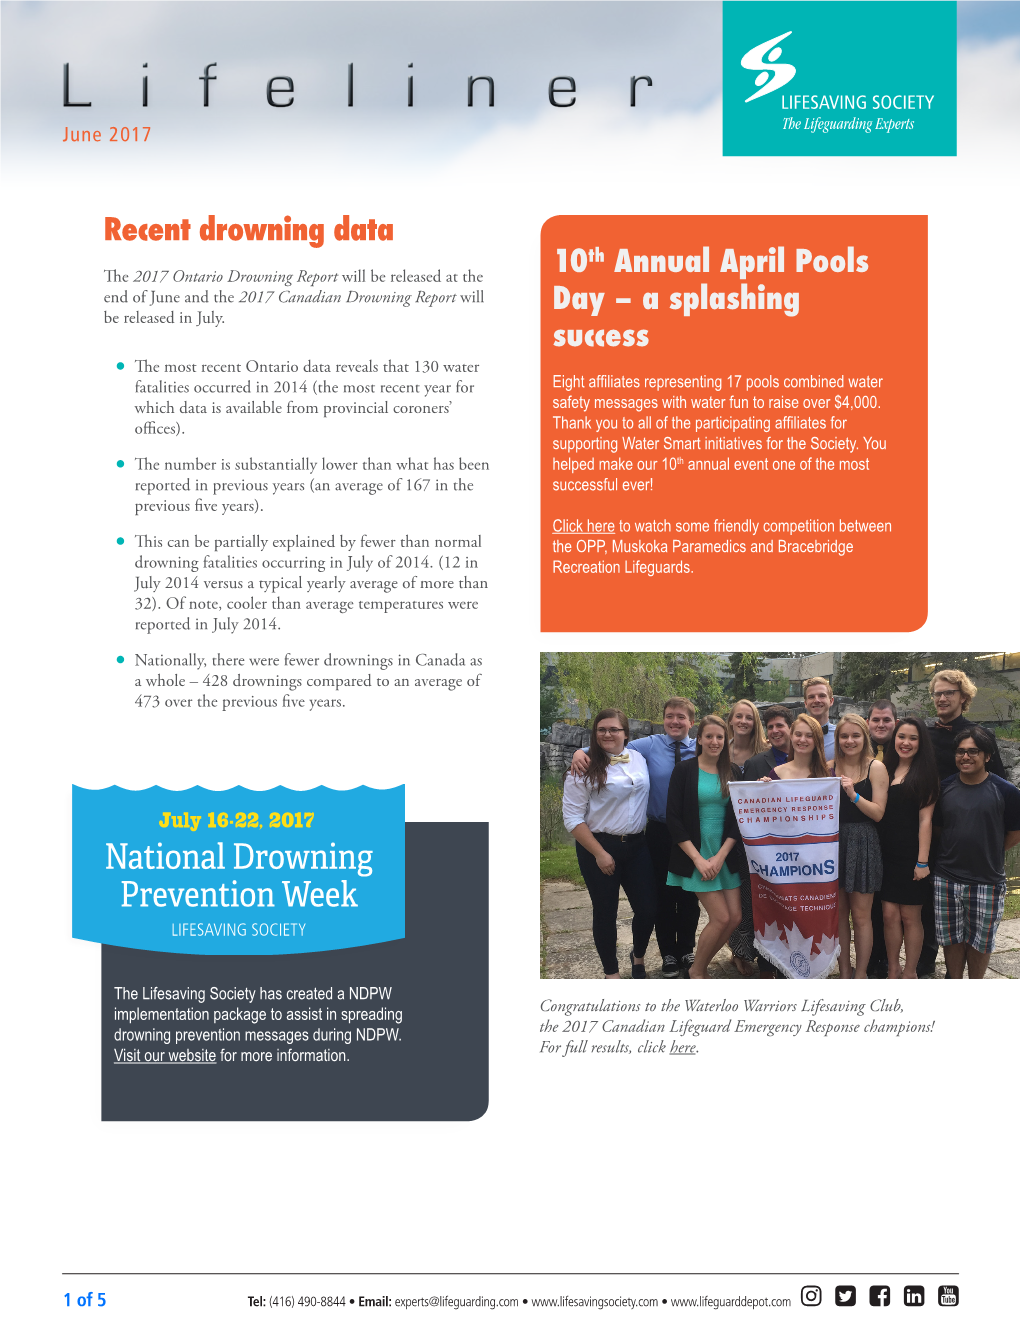 National Drowning Prevention Week LIFESAVING SOCIETY